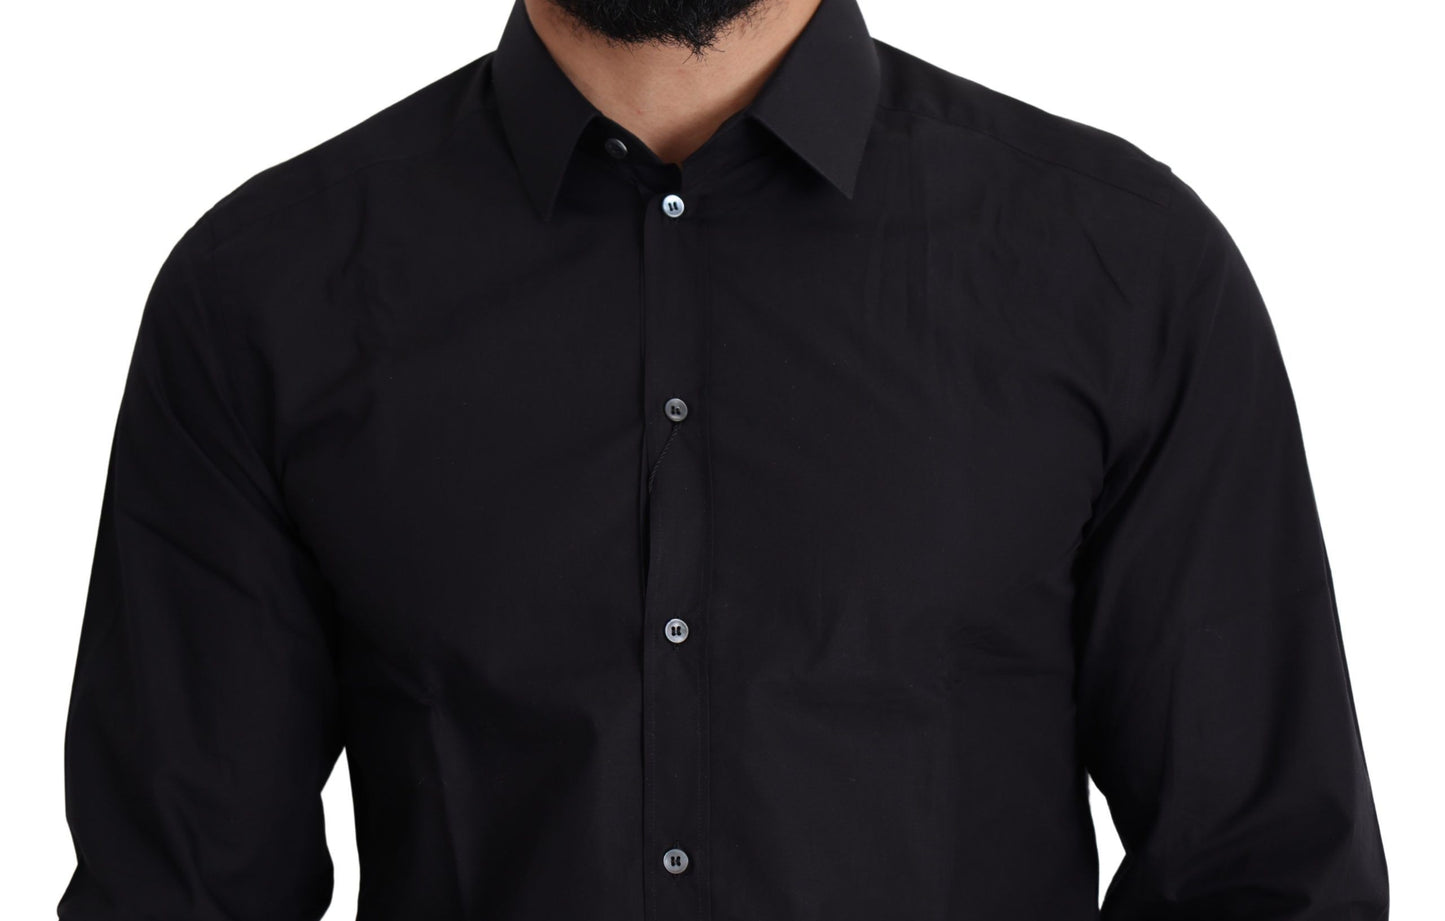 Sleek Black Cotton Dress Shirt